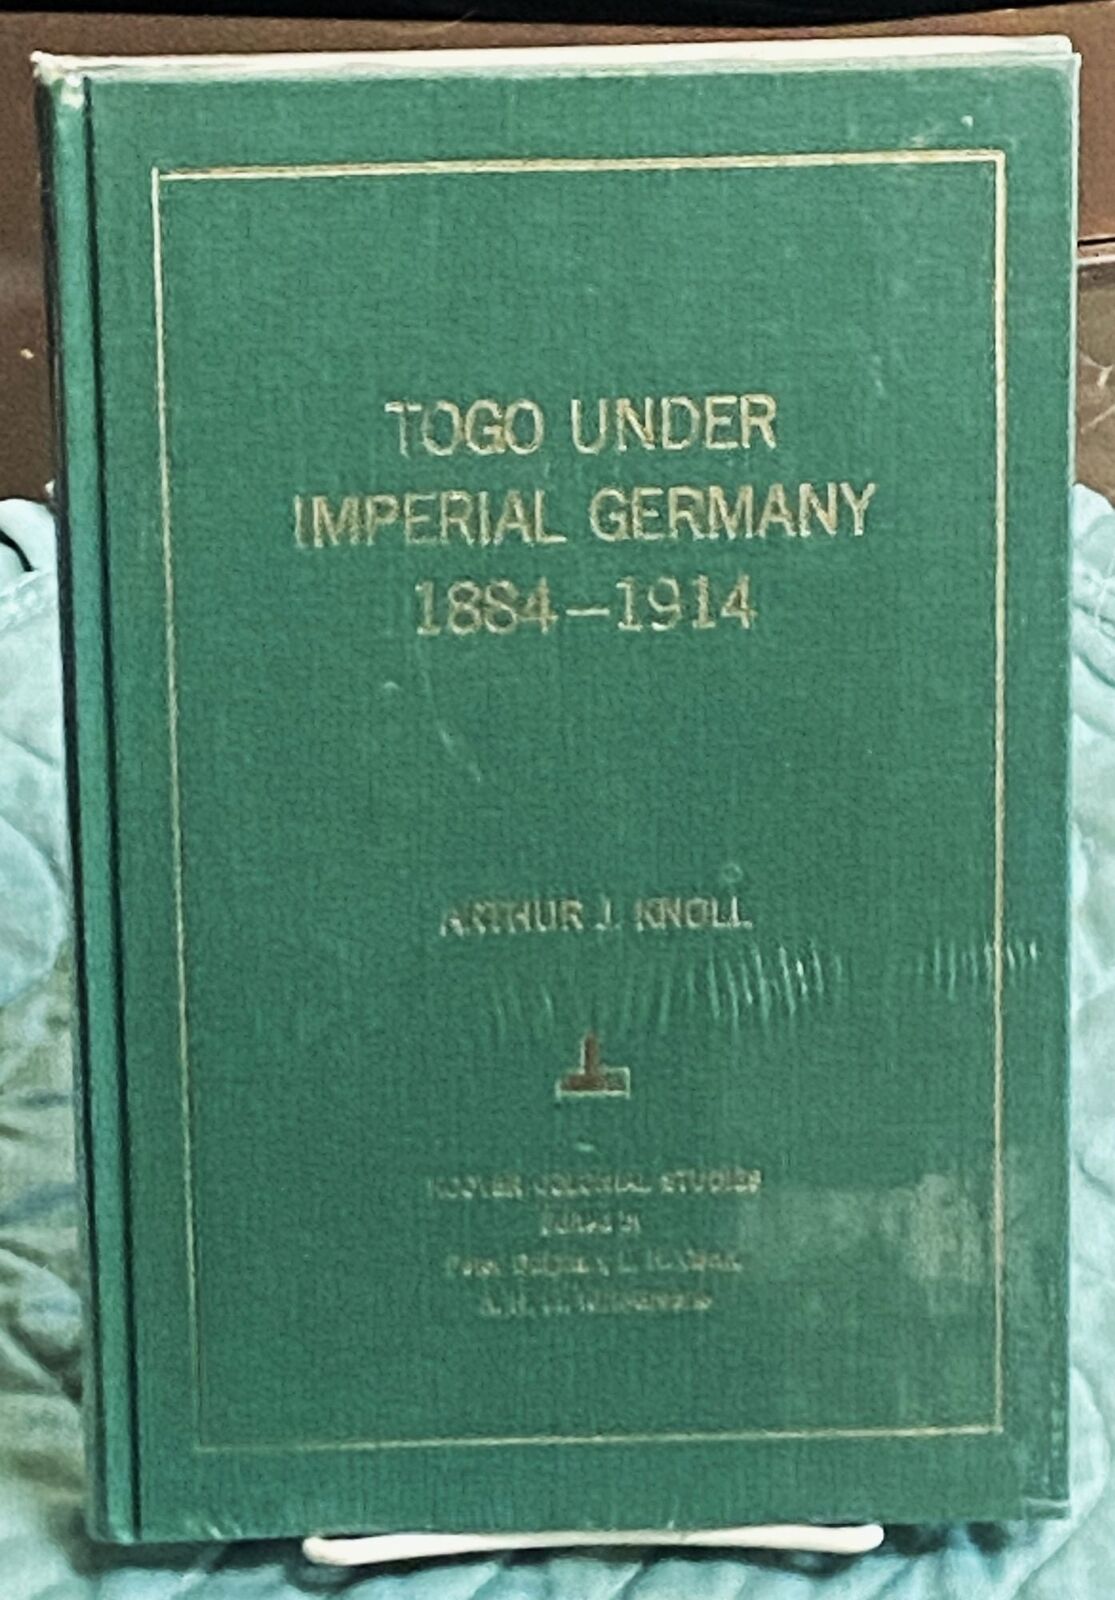 Arthur J Knoll / TOGO UNDER IMPERIAL GERMANY 1884-1914 1978